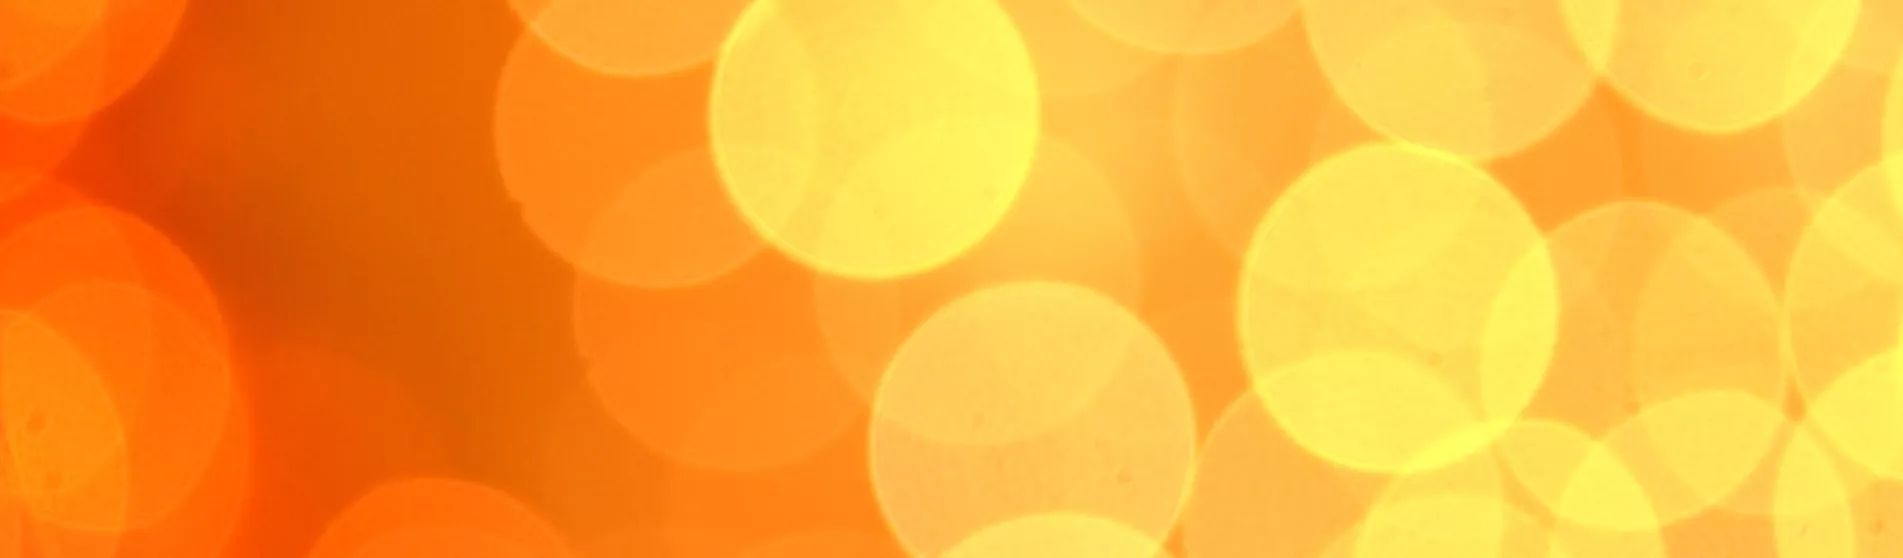 CSMH Fest- Hero image - blurred orange and yellow lights